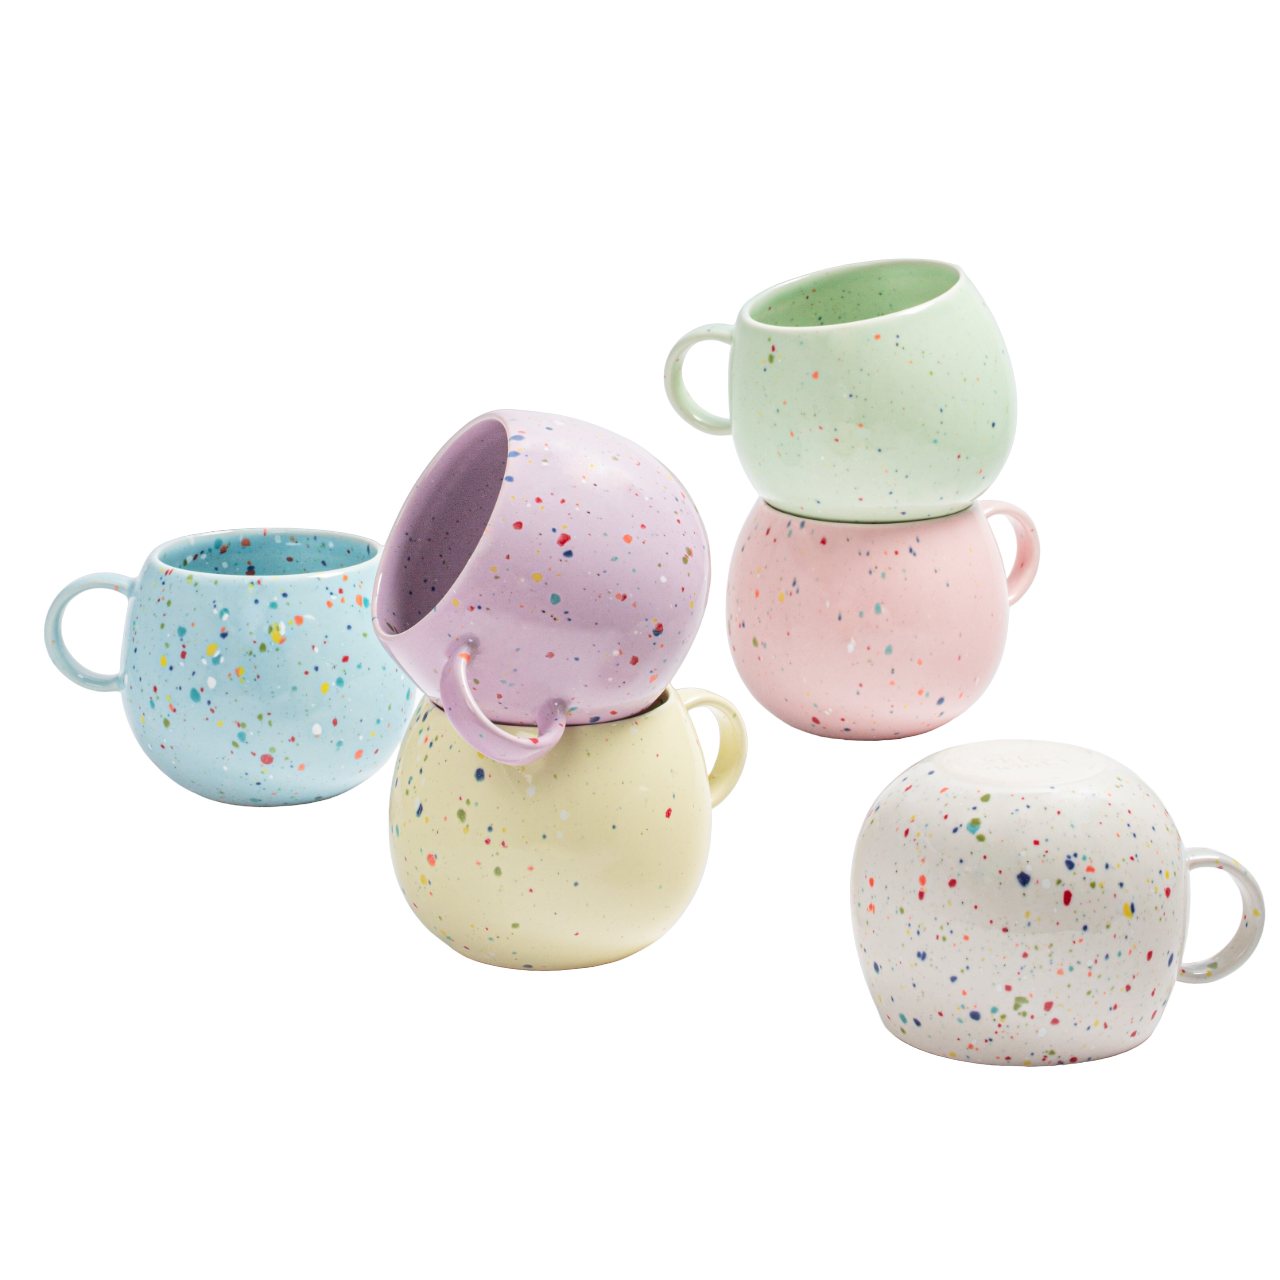 handmade ceramic mugs from portugal